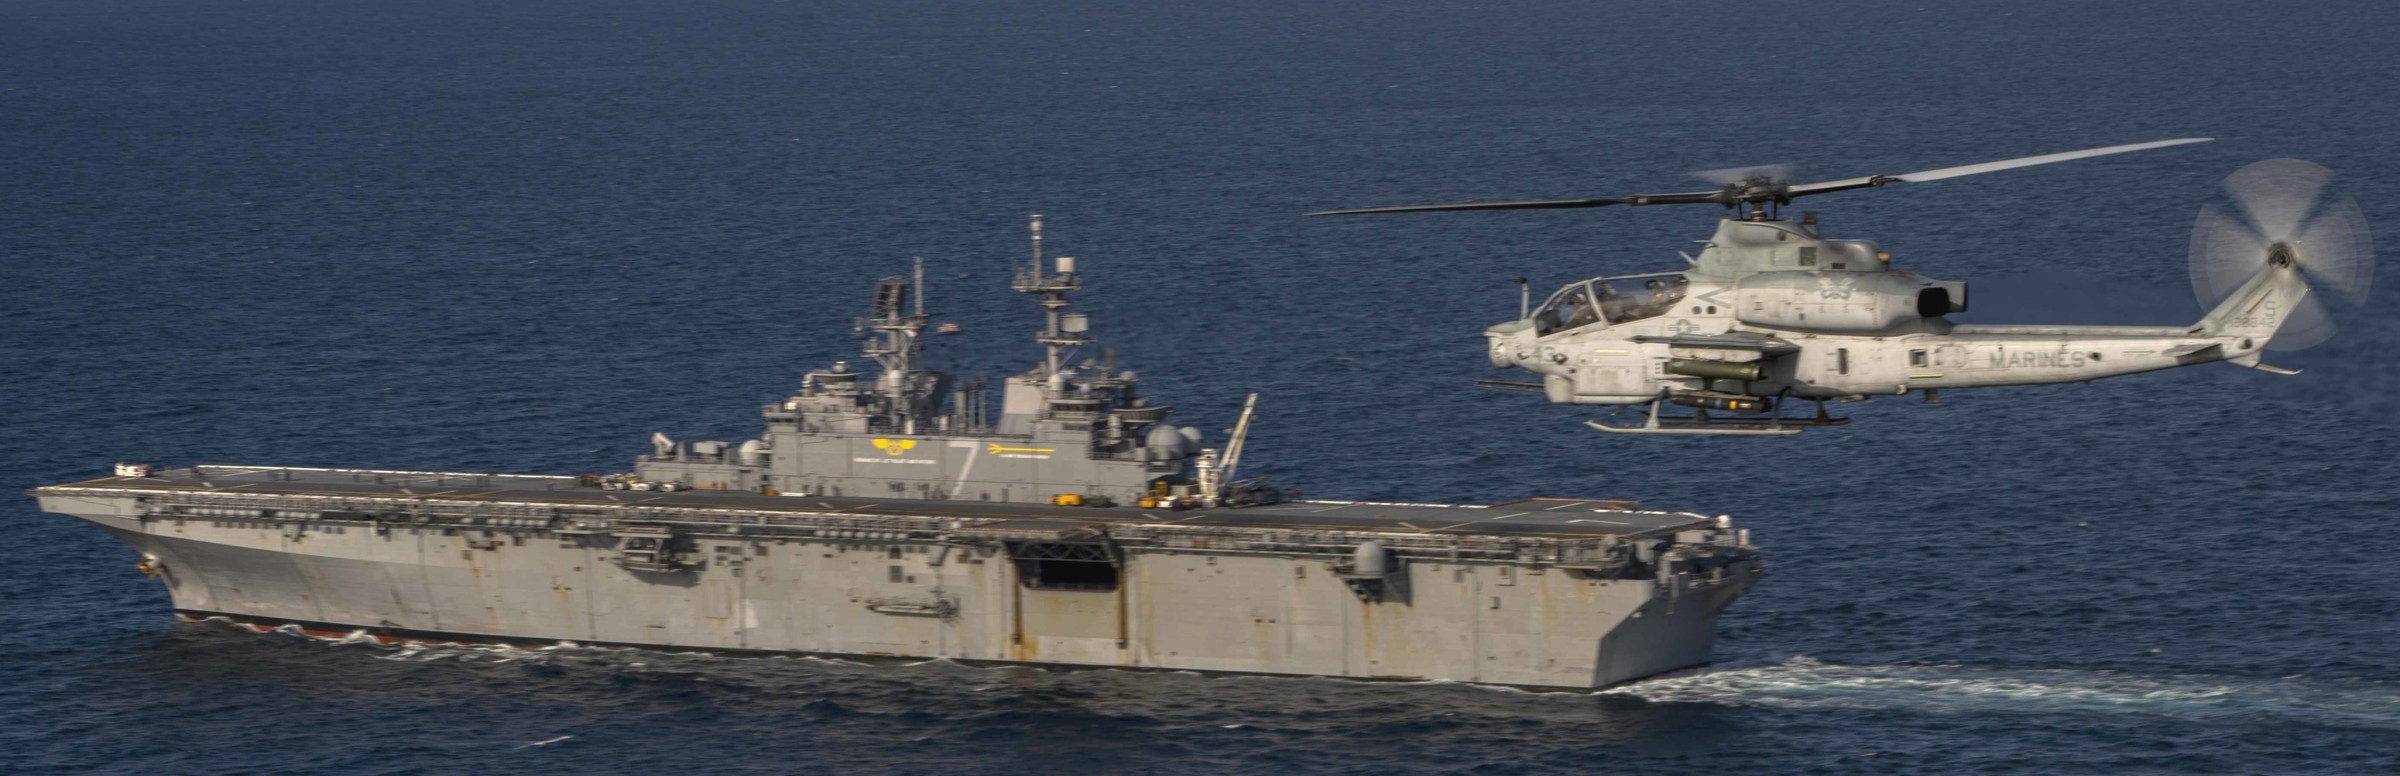 lha-7 uss tripoli america class amphibious assault ship landing us navy marines exercise steel knight 2022 75